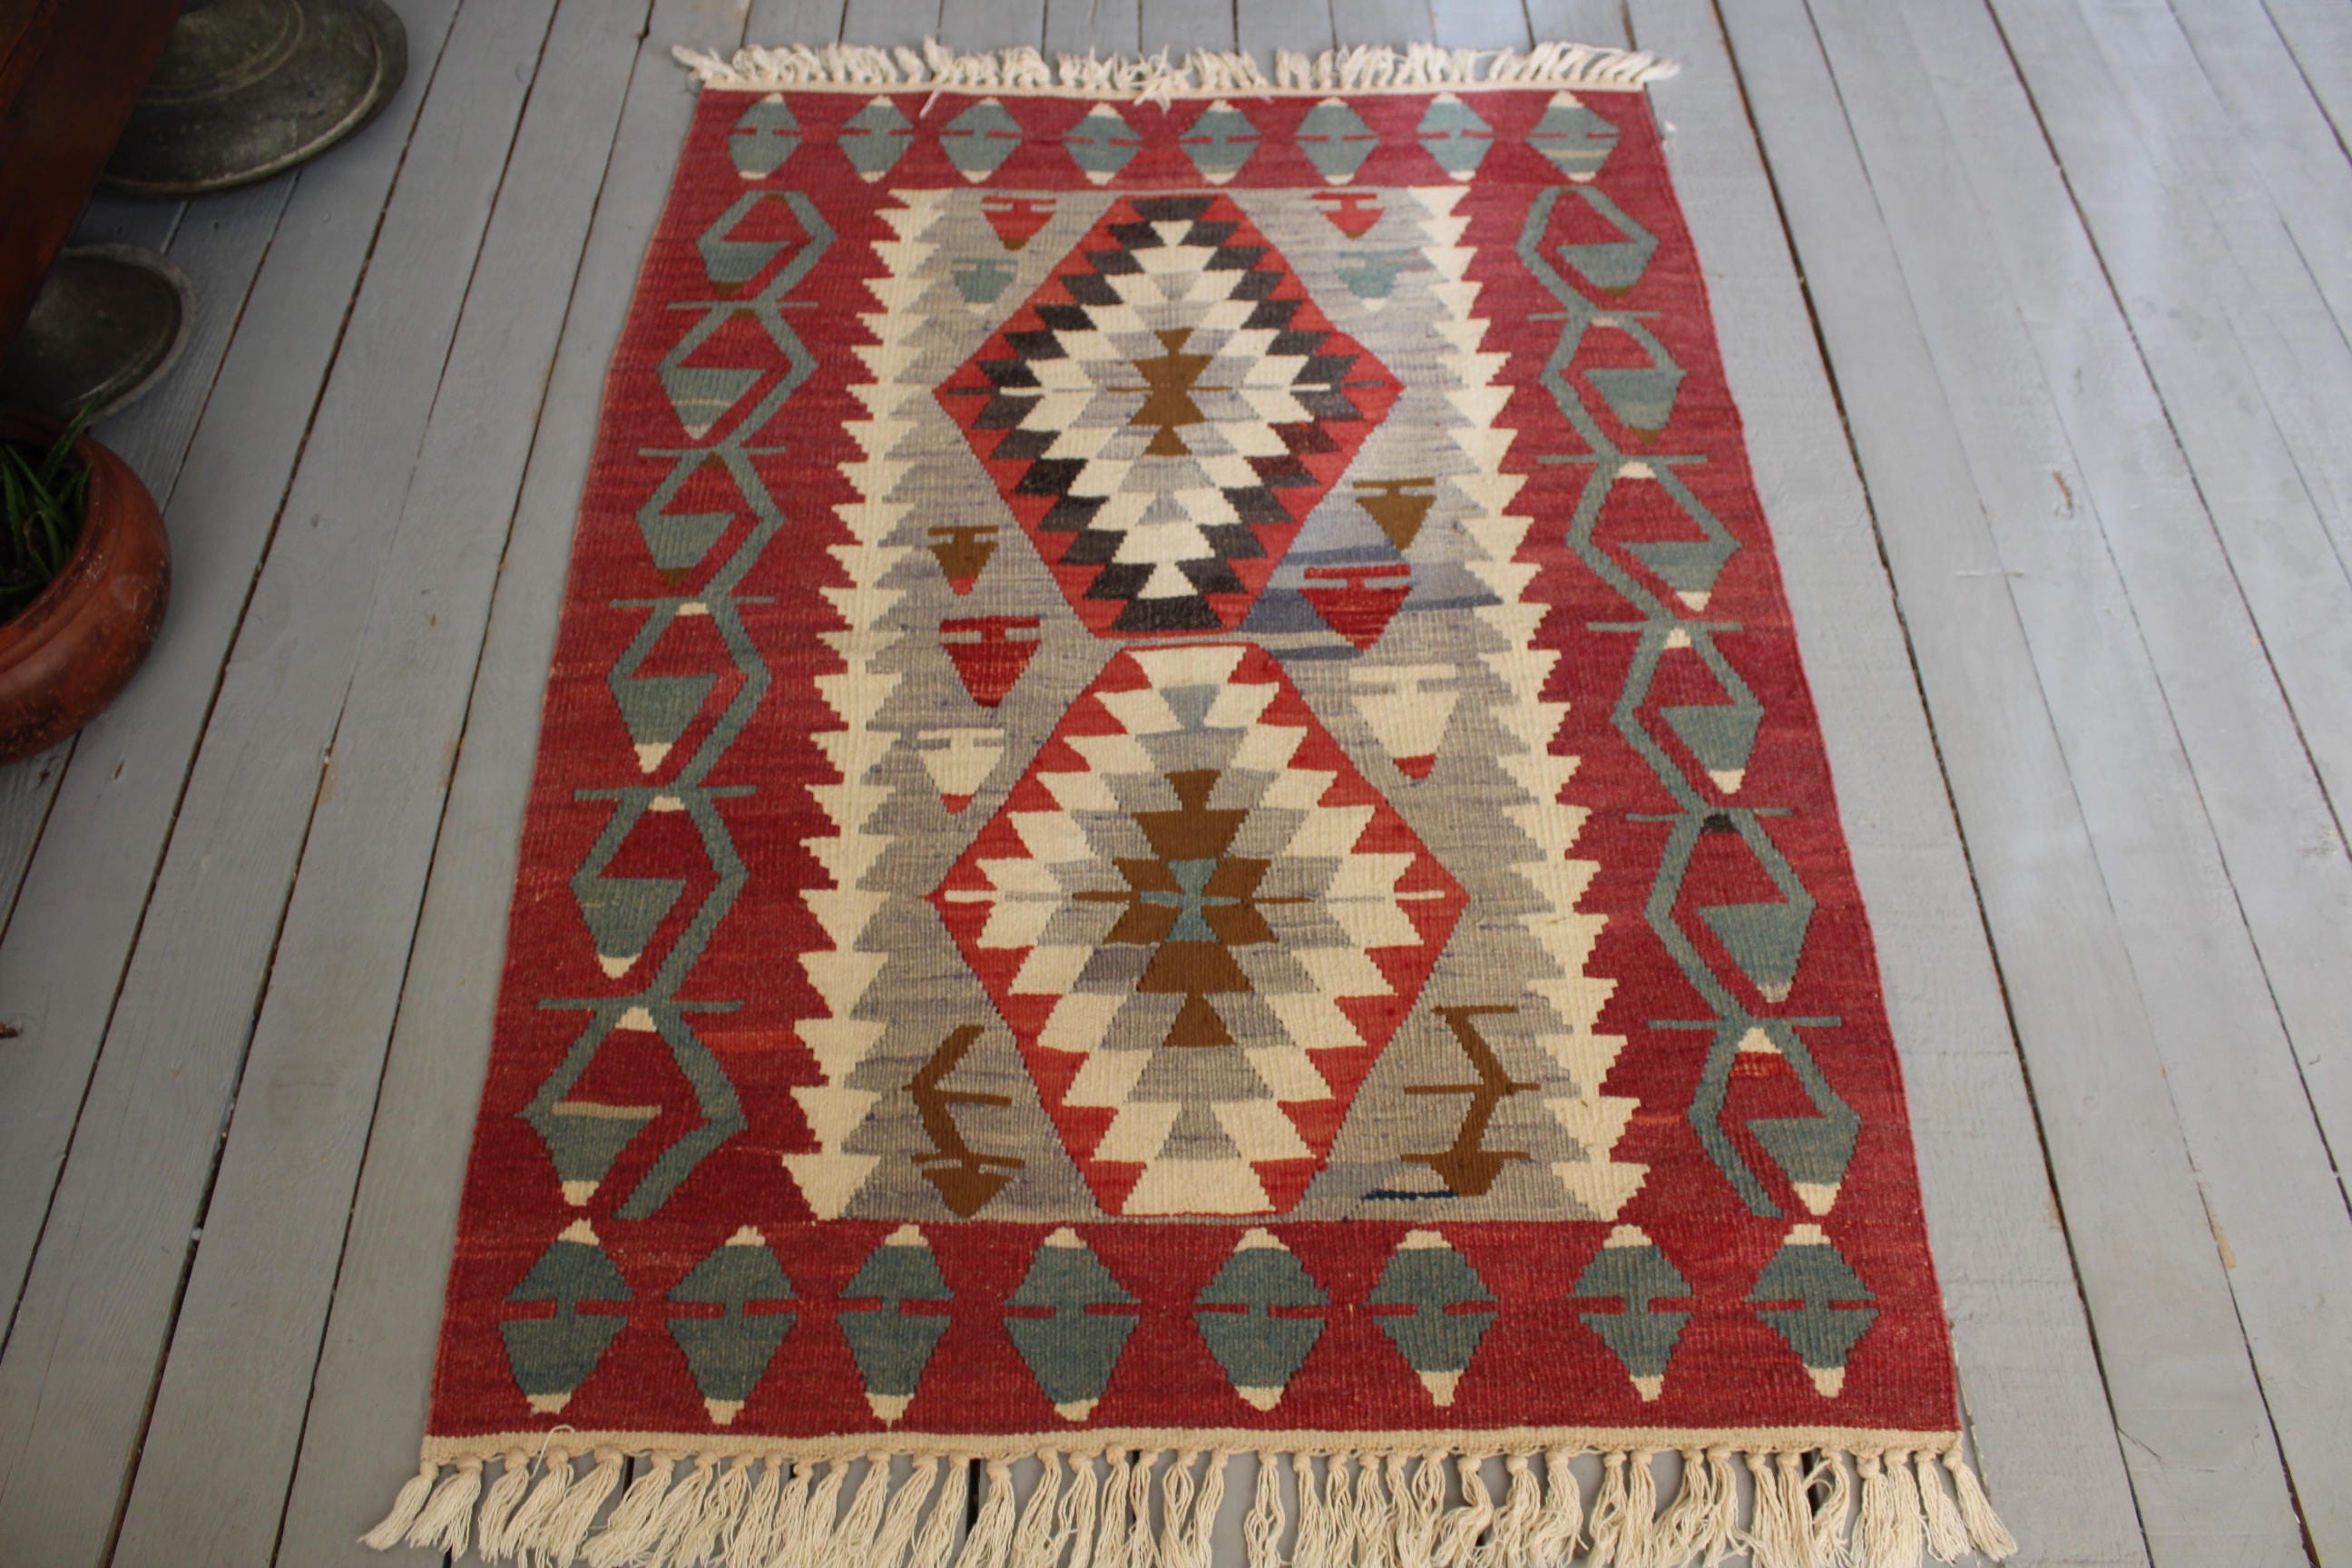 3'x4' Bohemian Ethnic Handwoven Wool Small Kilim Rug, Decorative Entry, Bedroom Kilim